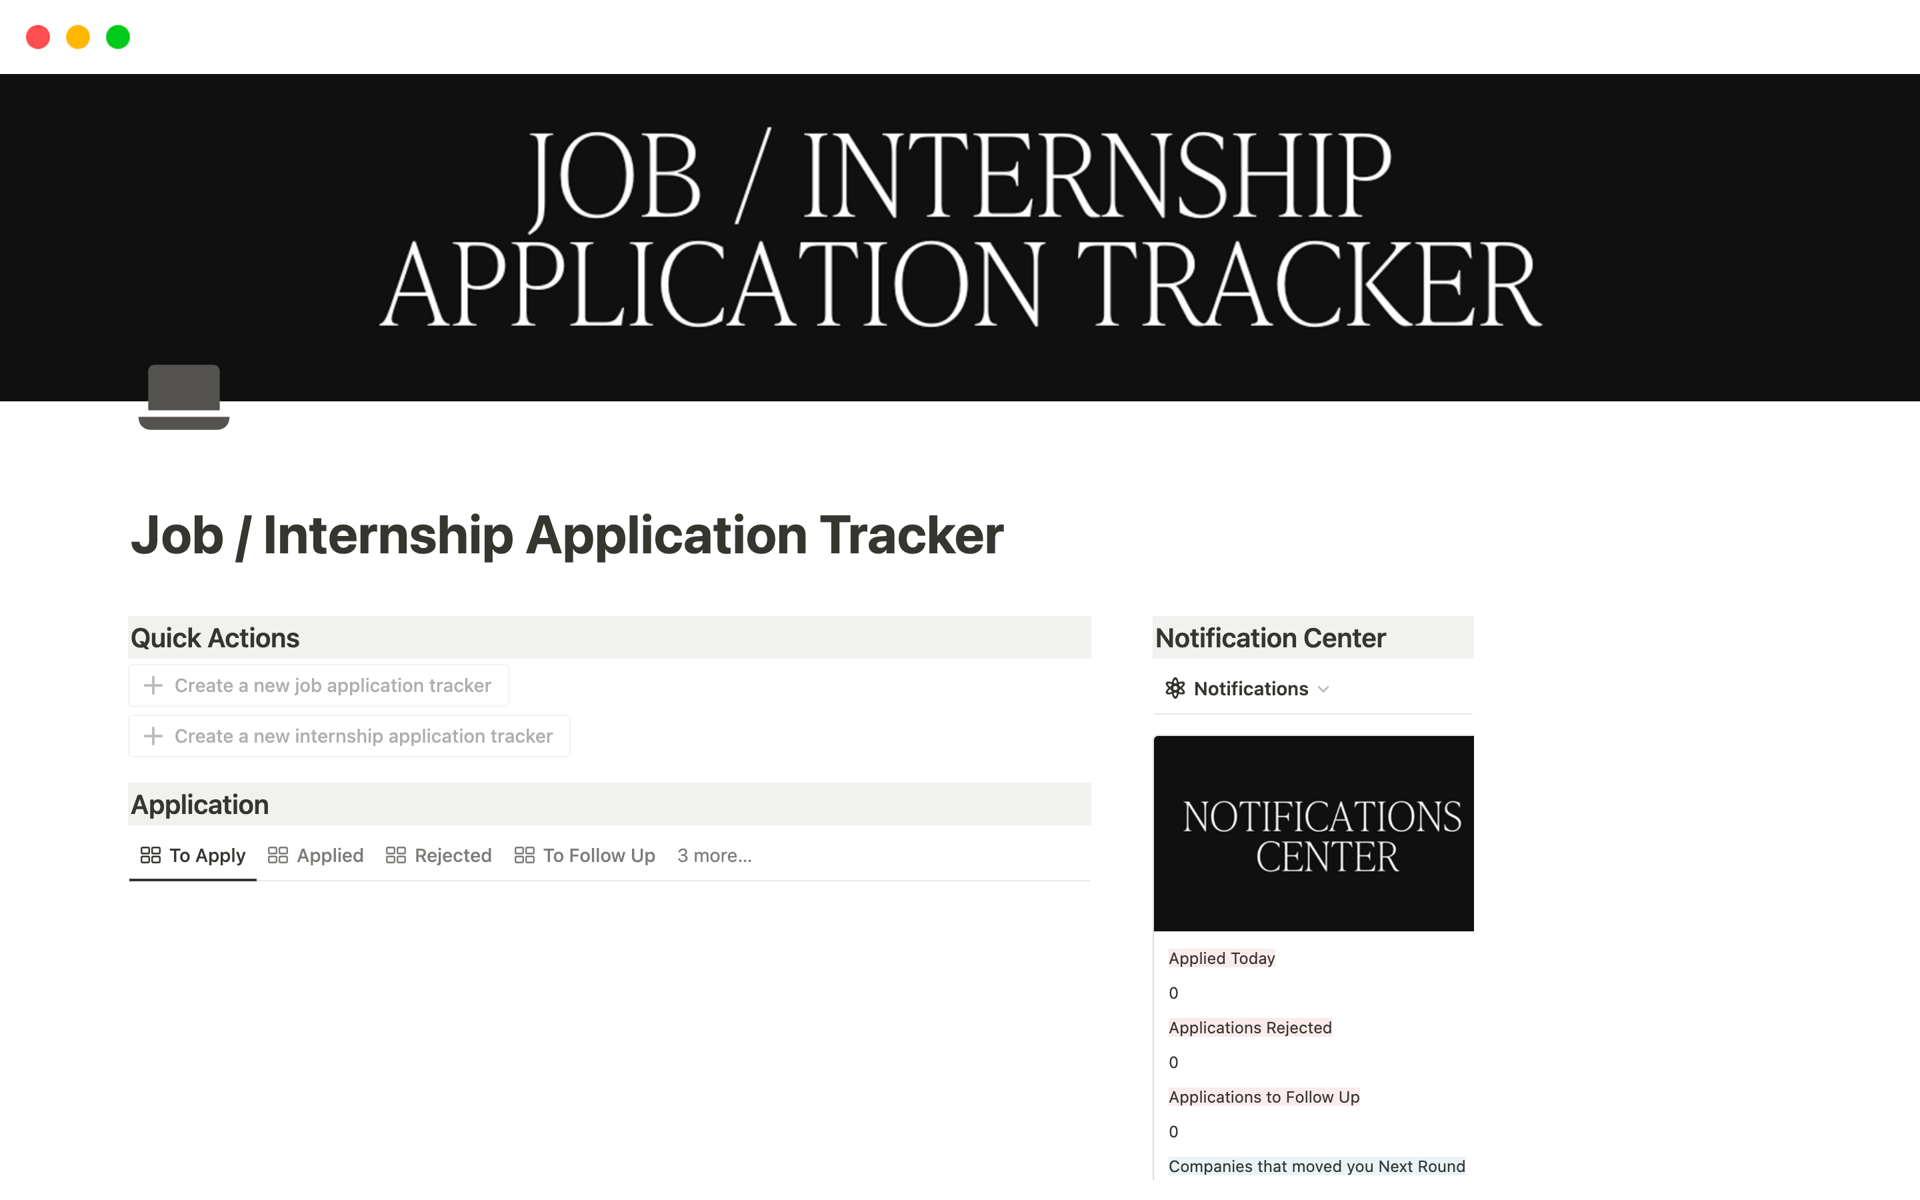 Aperçu du modèle de Job / Internship Application Tracker